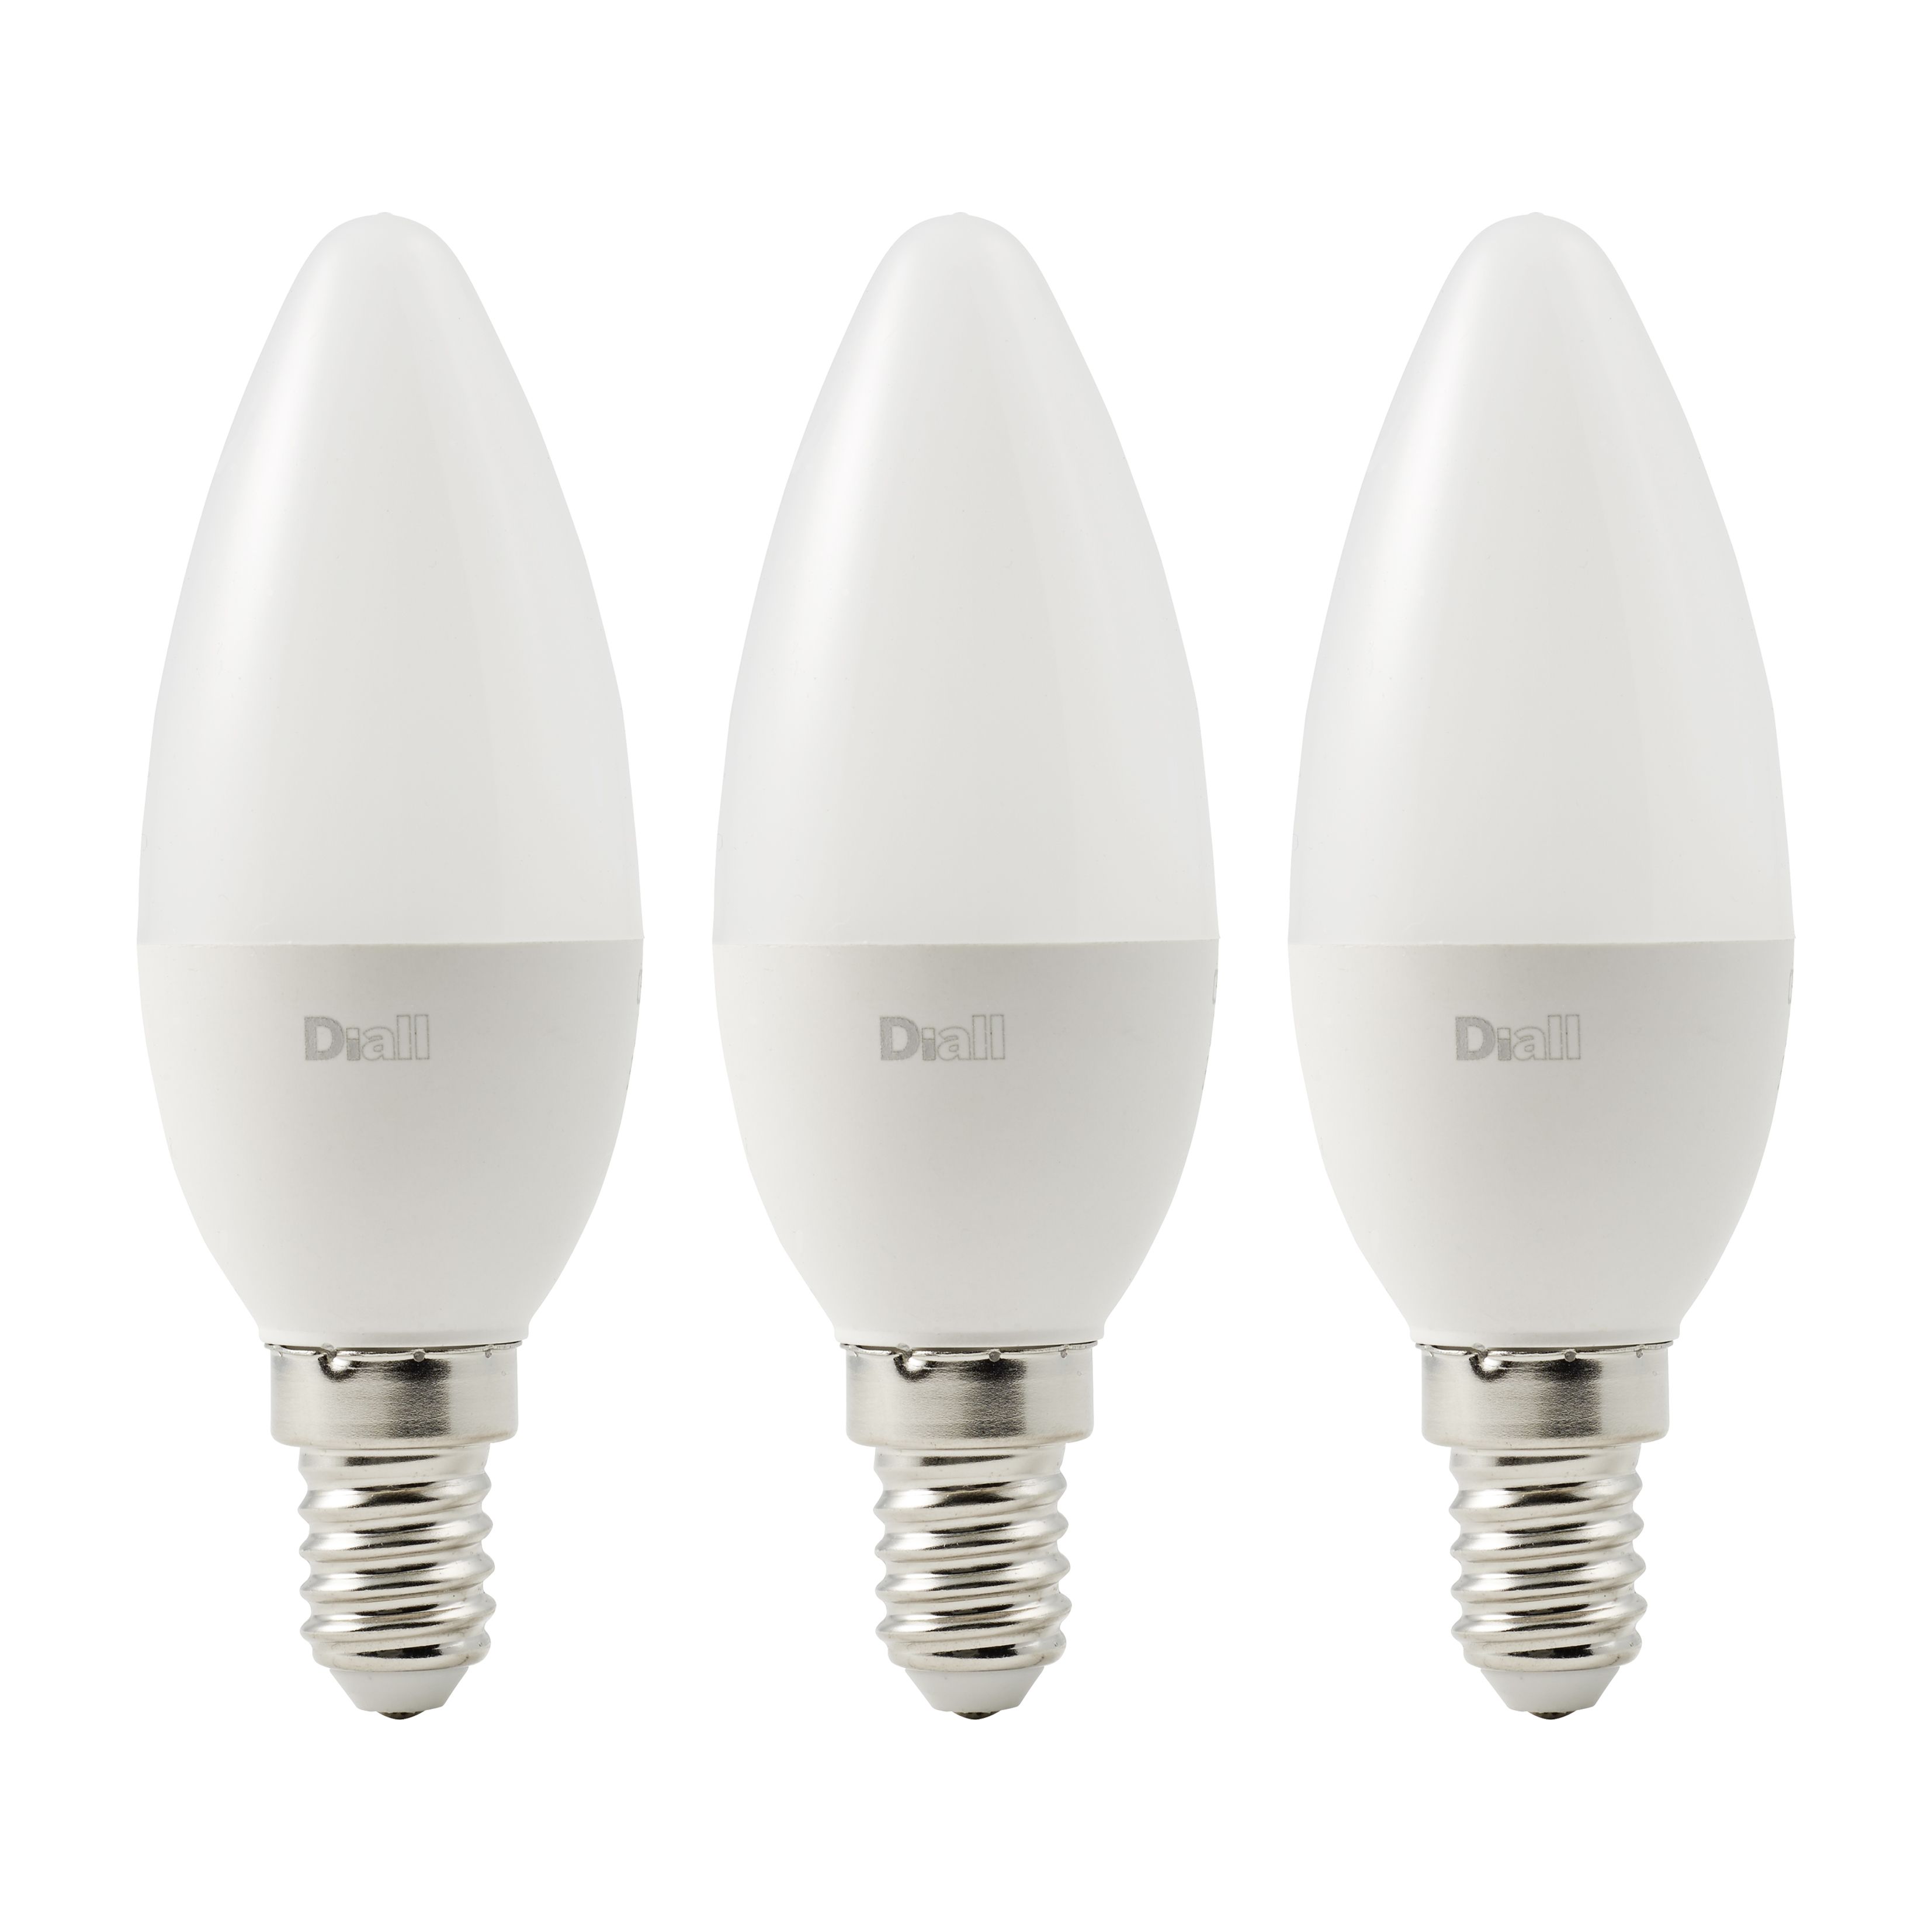 Diall E14 3W 250lm Warm white LED Light bulb, Pack of 3 DIY at B&Q